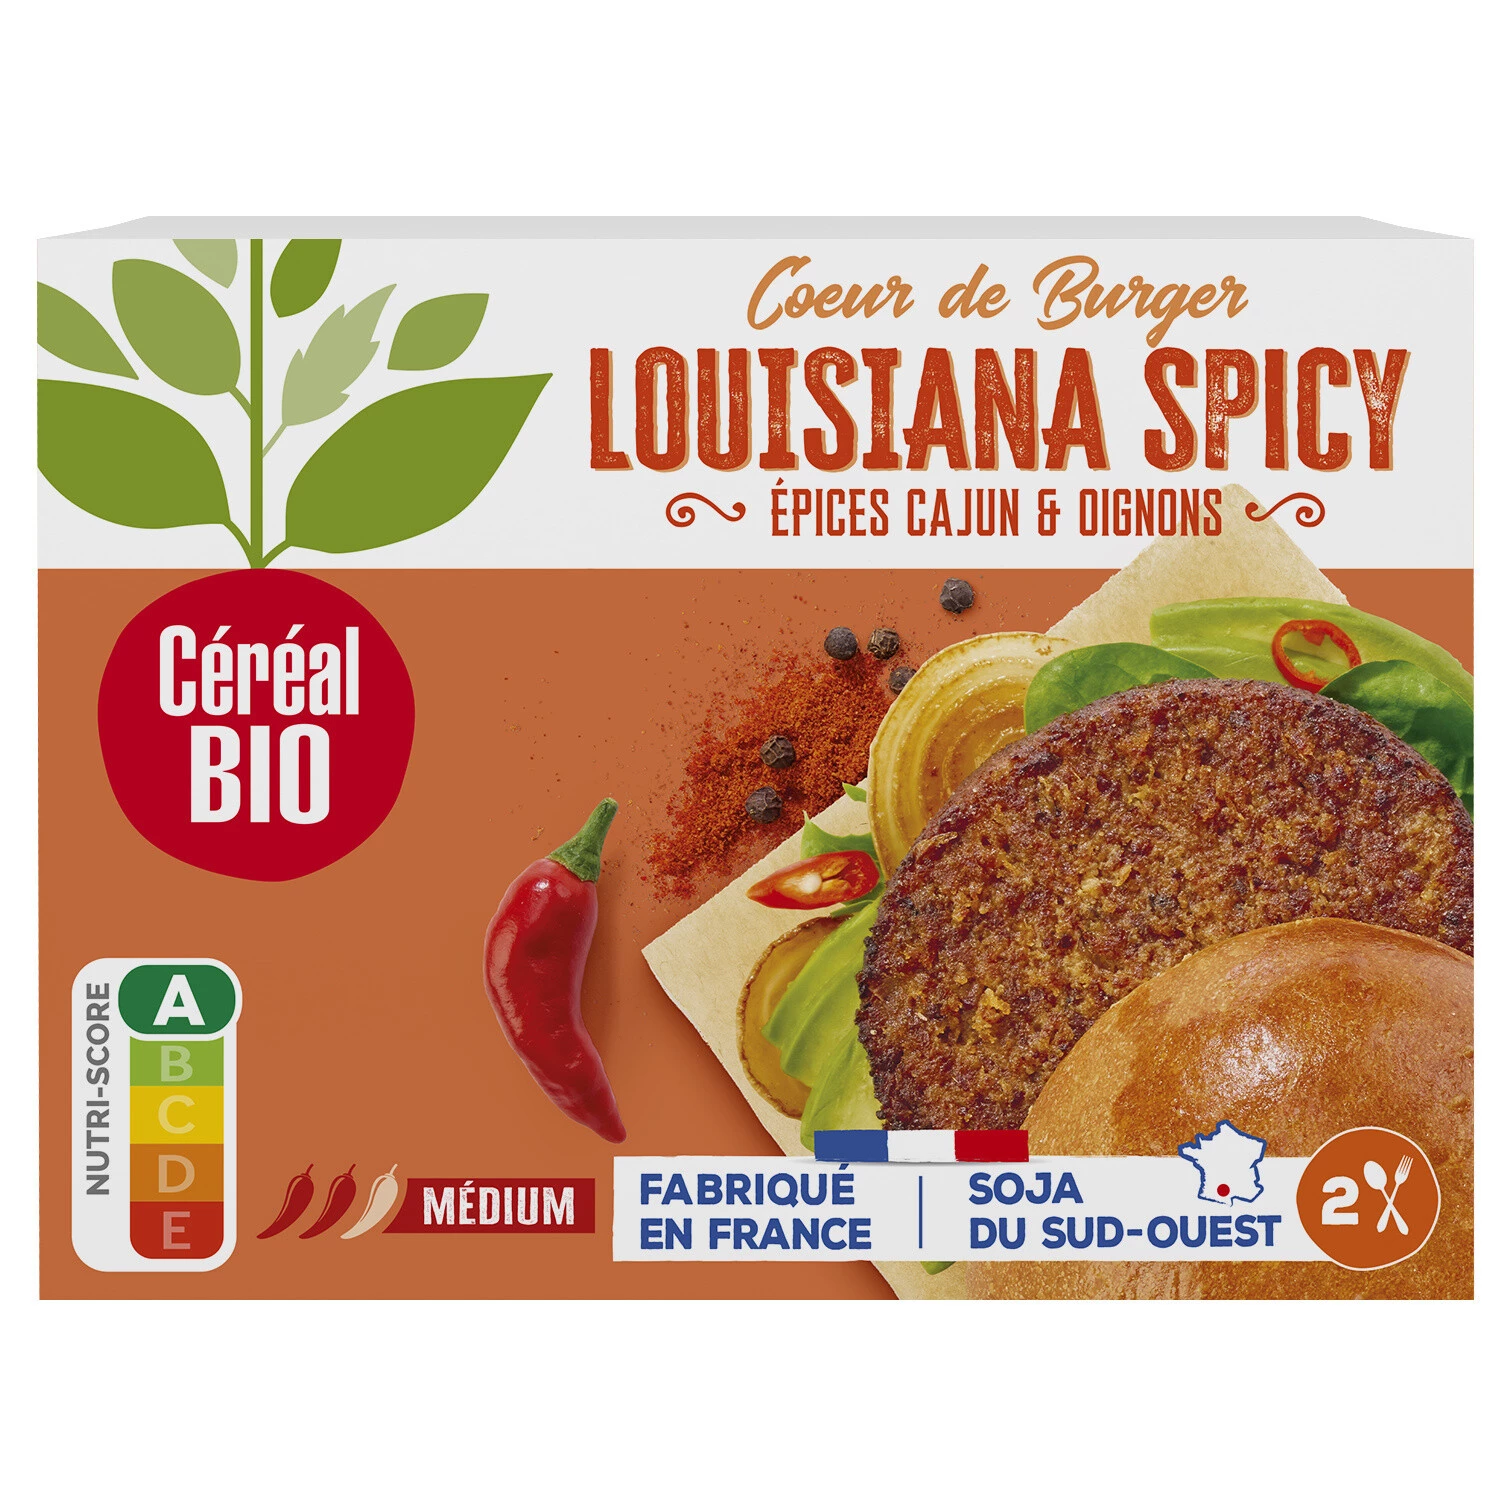 Steak Veggie Louisiana Spicy Epices Cajun & Oignons 160g - Cereal Bio